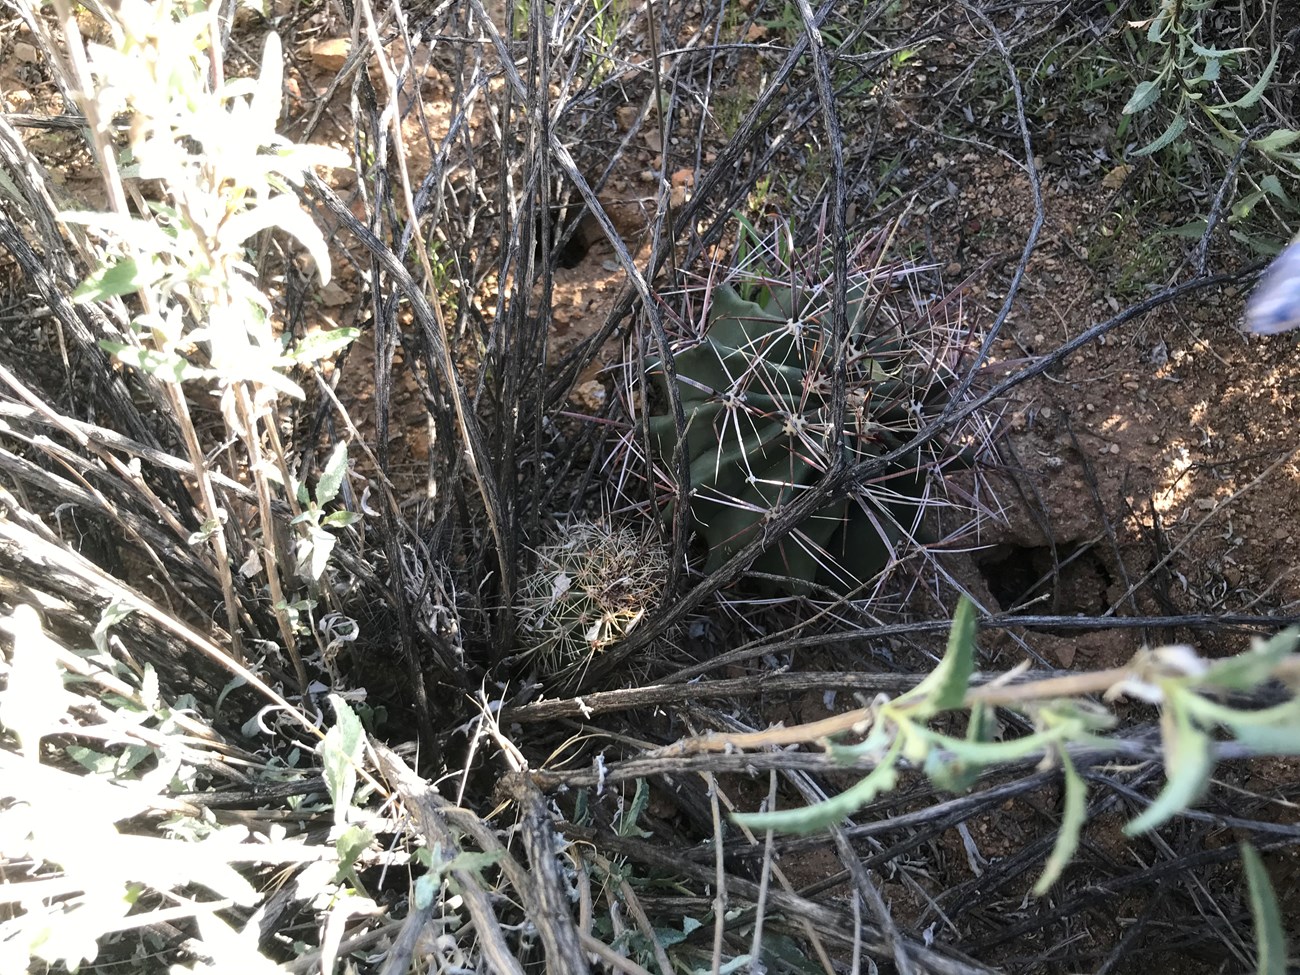 Tiny saguaros hidden under bursage shrub